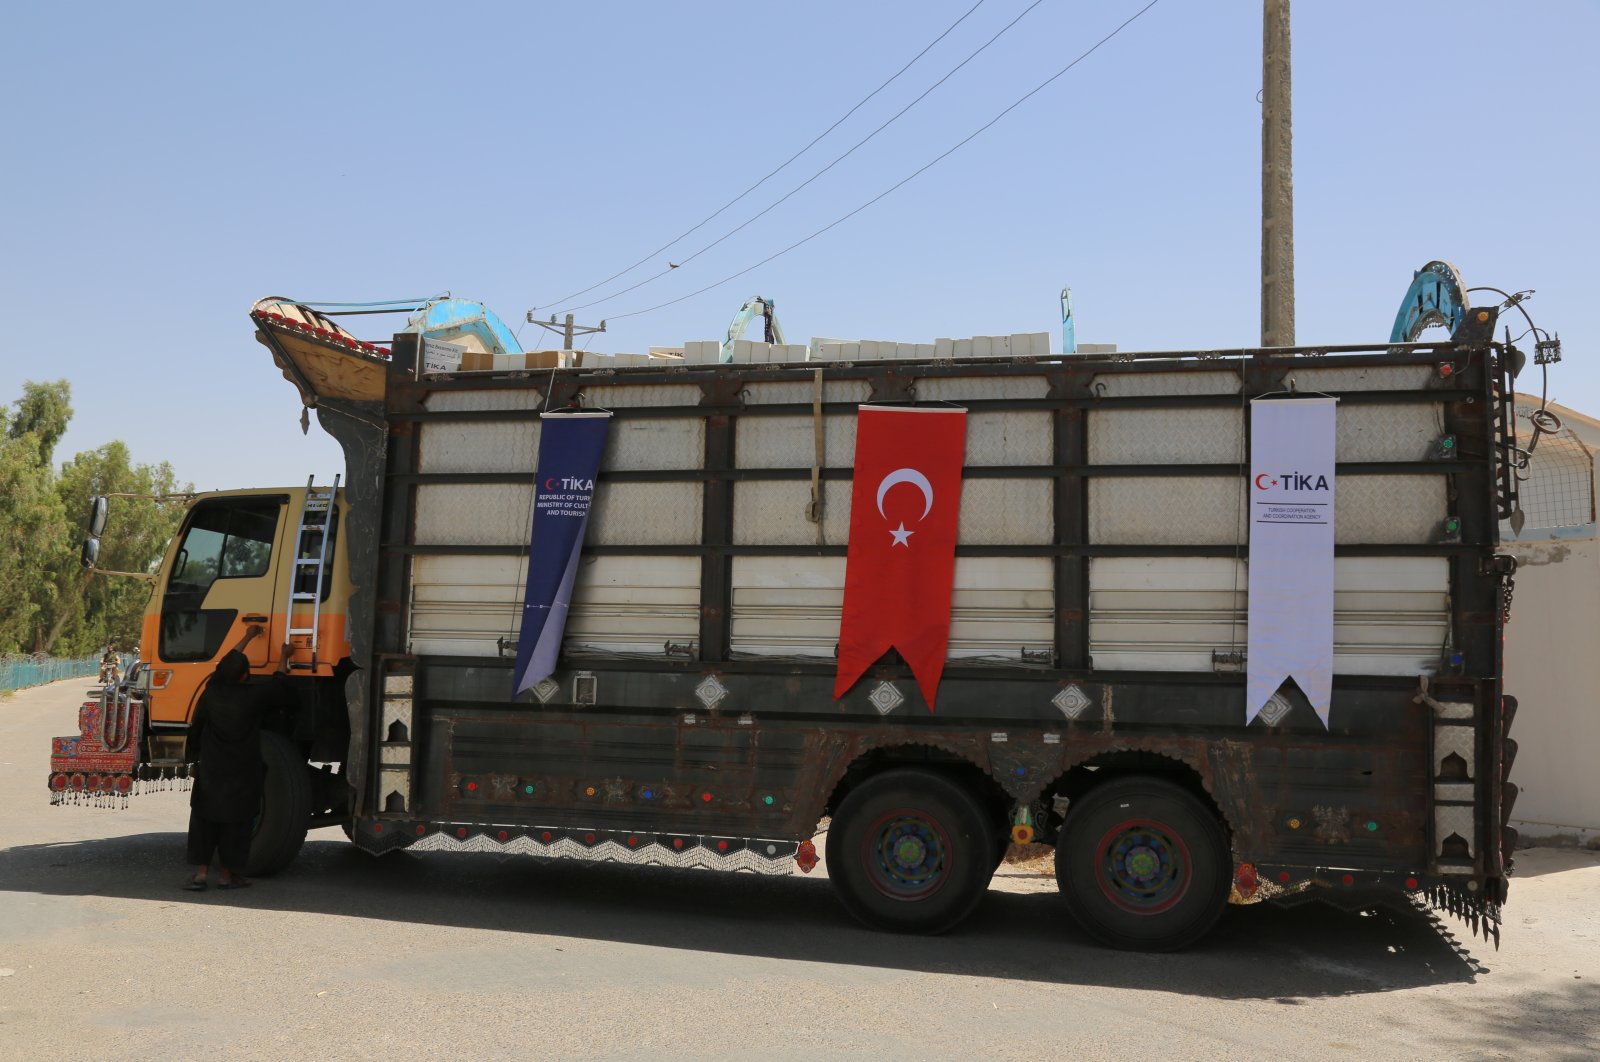 A TIKA truck carries aid in Kabul, Afghanistan, June 6, 2022. (AA PHOTO)